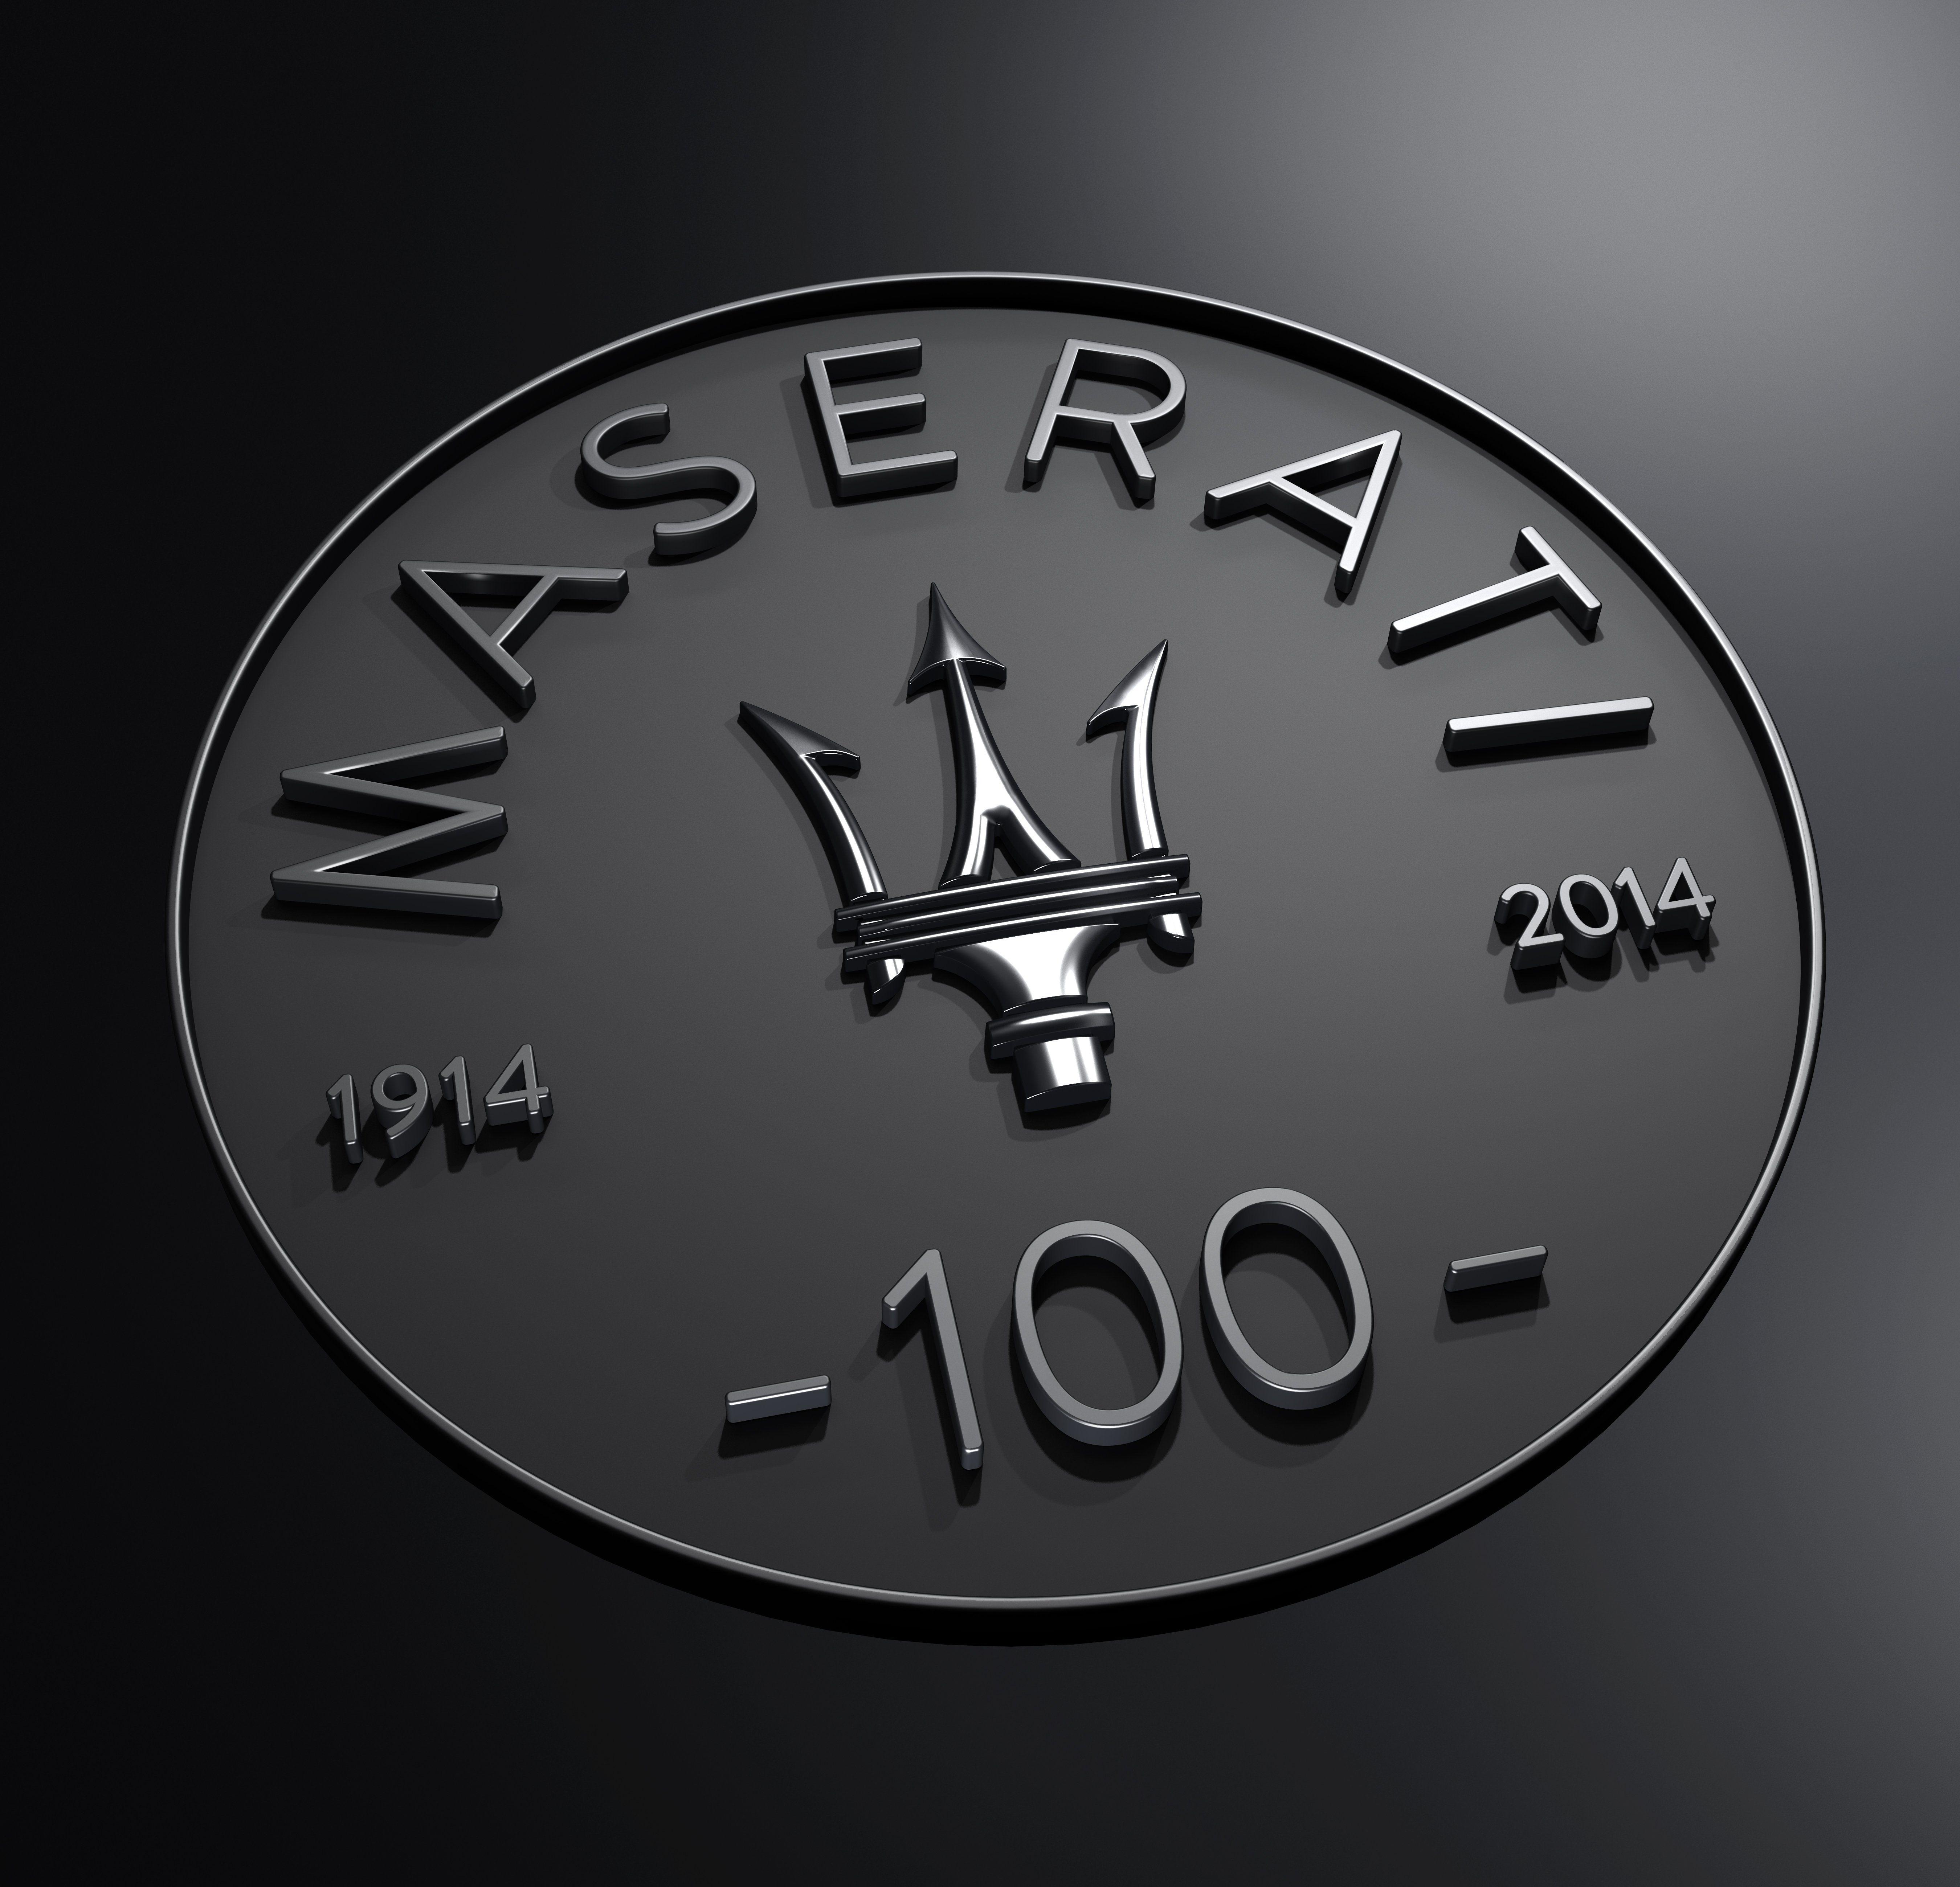 Maserati Logo Hd Wallpapers